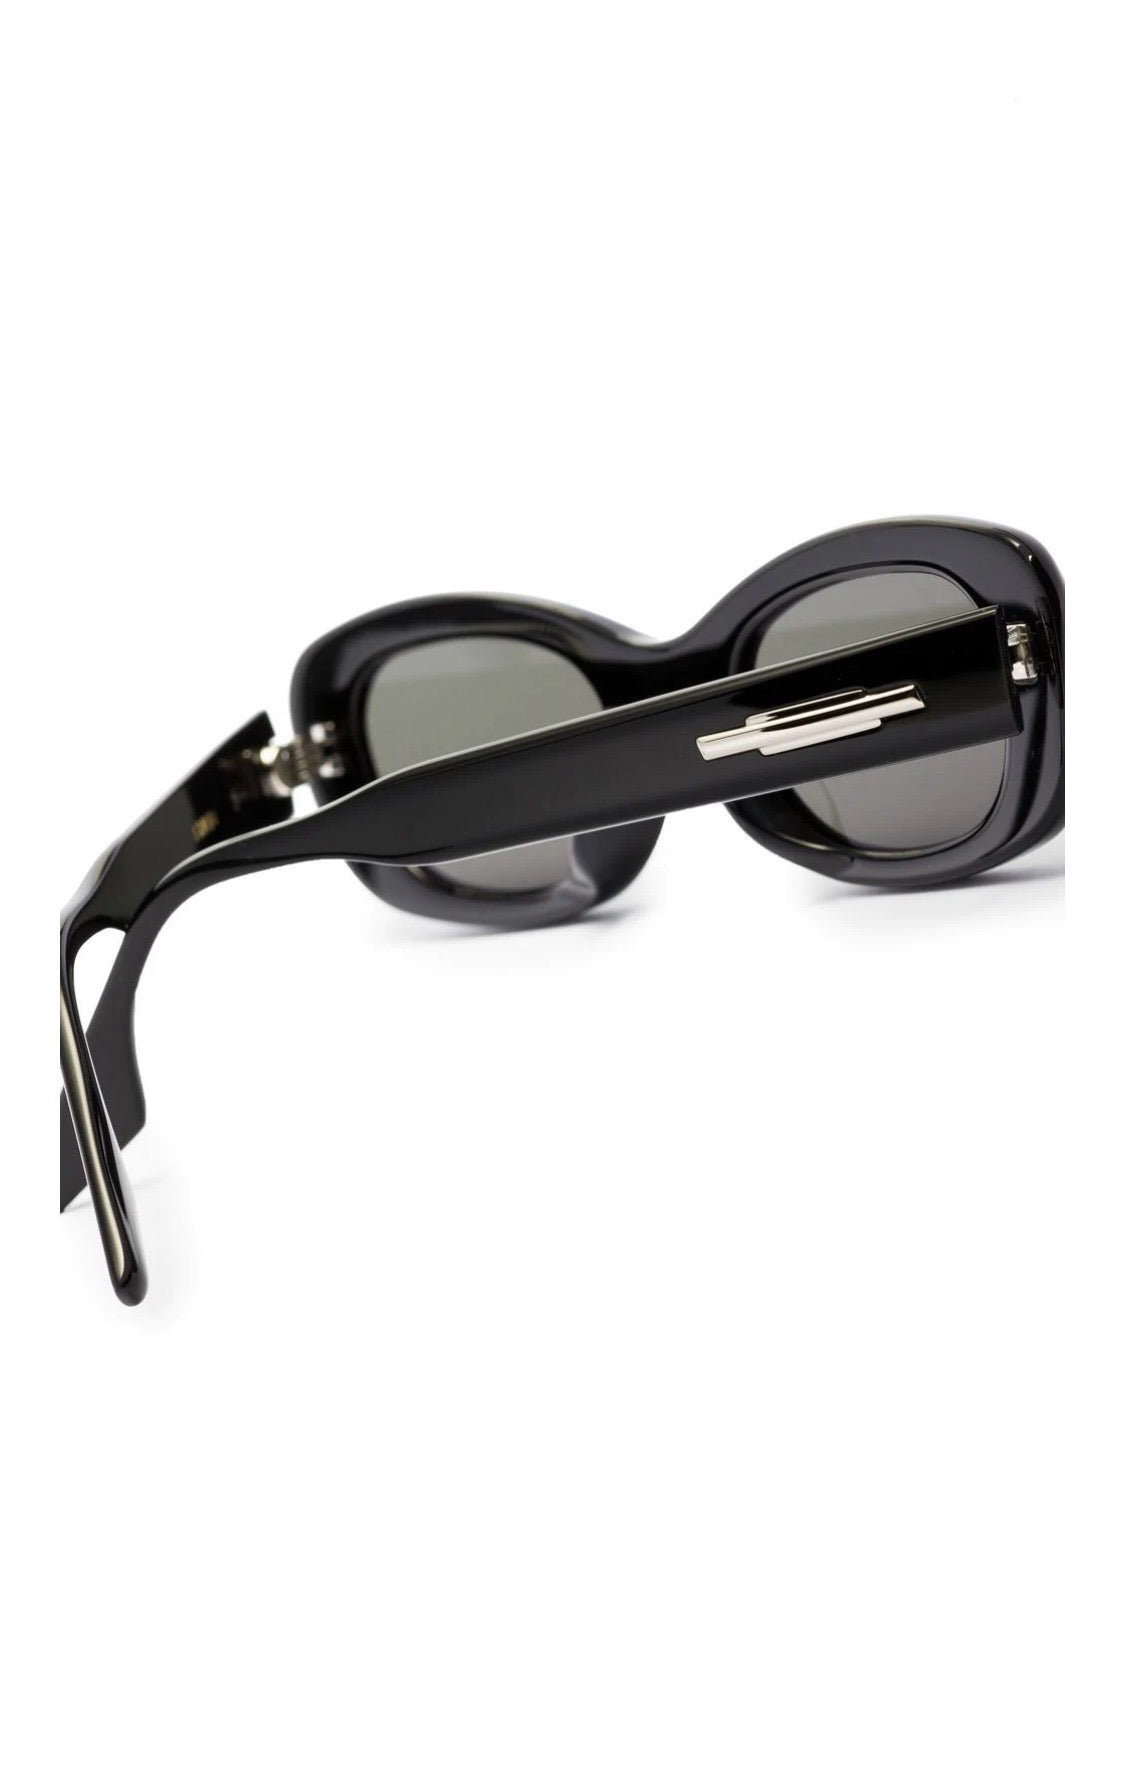 Jodykoes® Retro Style Vintage-Inspired Cat Eye Sunglasses Eyewear For Women (Black)